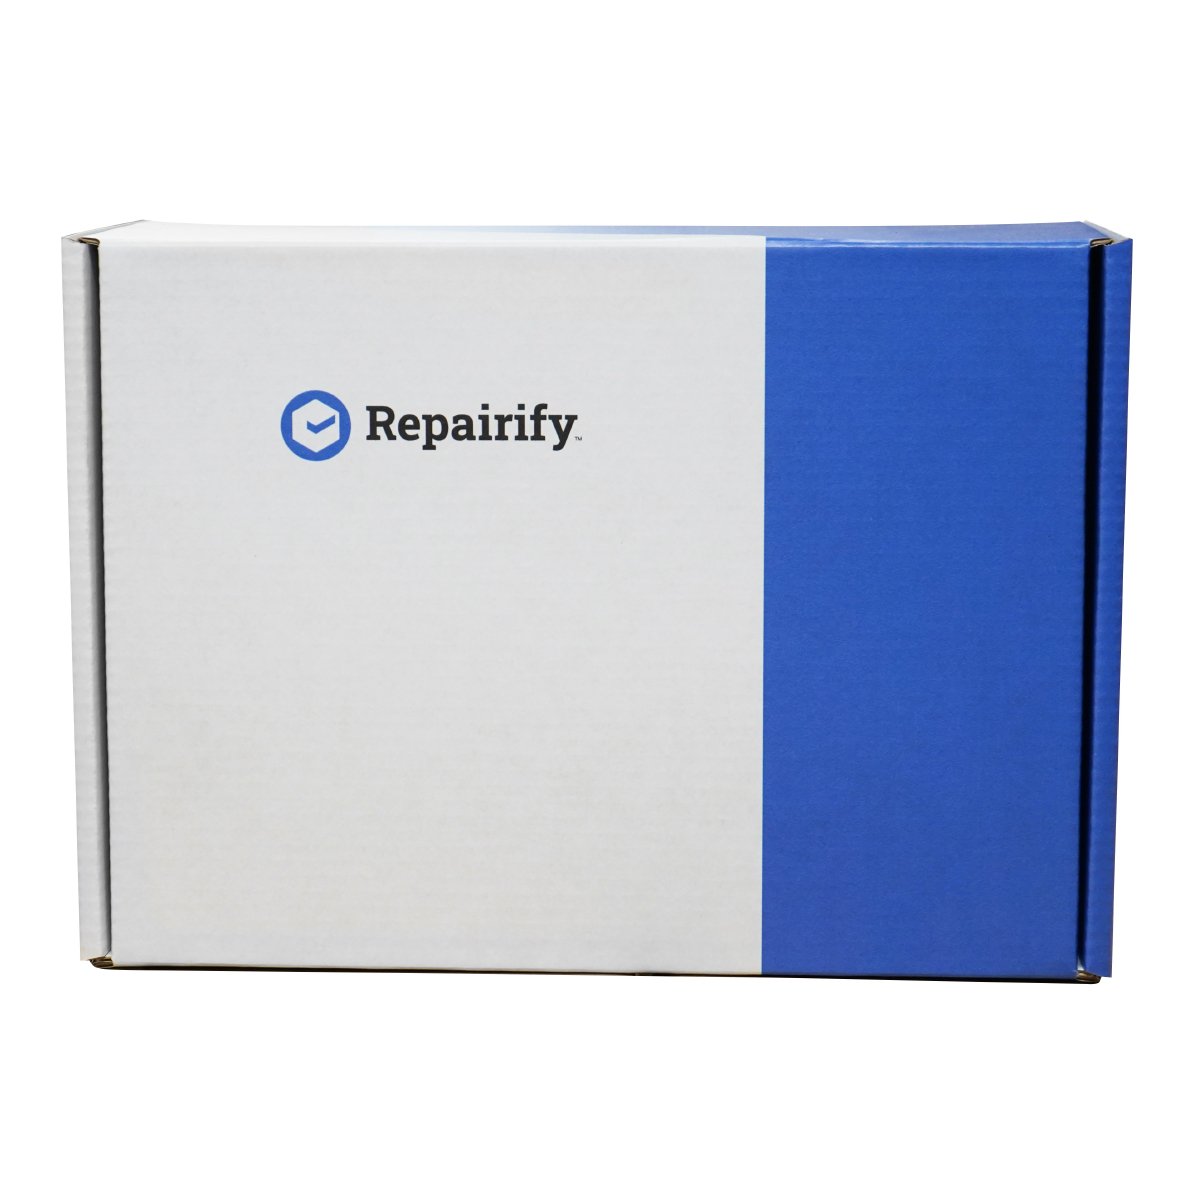 Repairify_Box